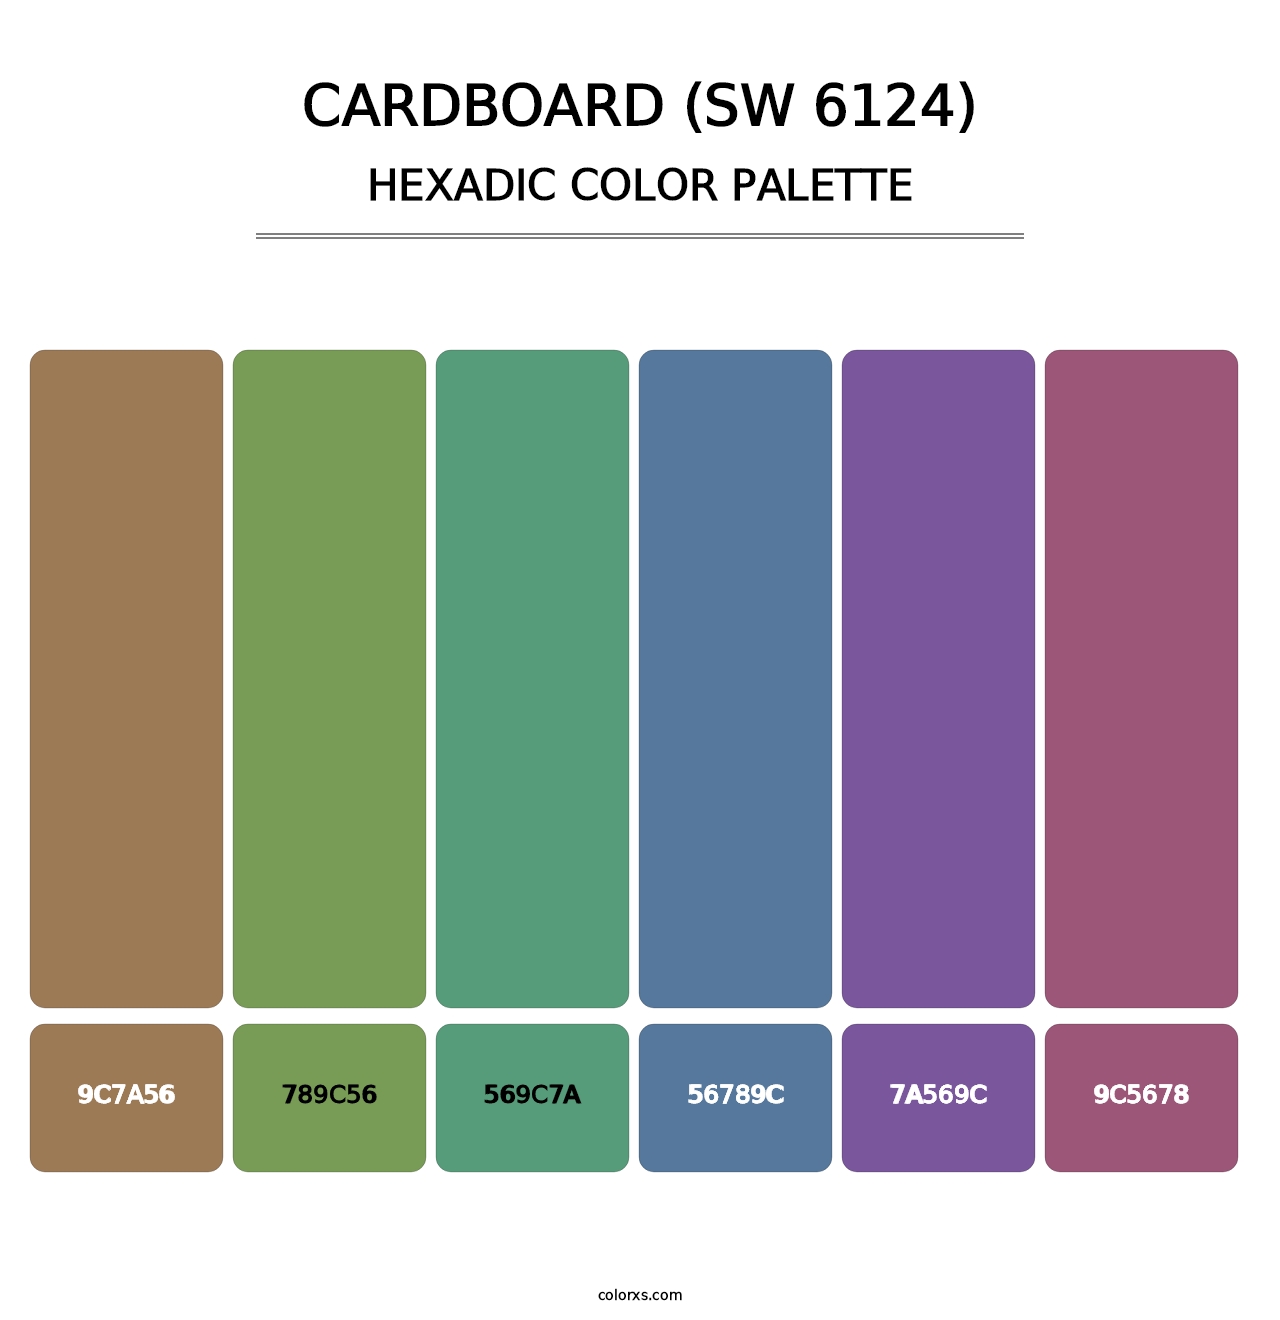 Cardboard (SW 6124) - Hexadic Color Palette